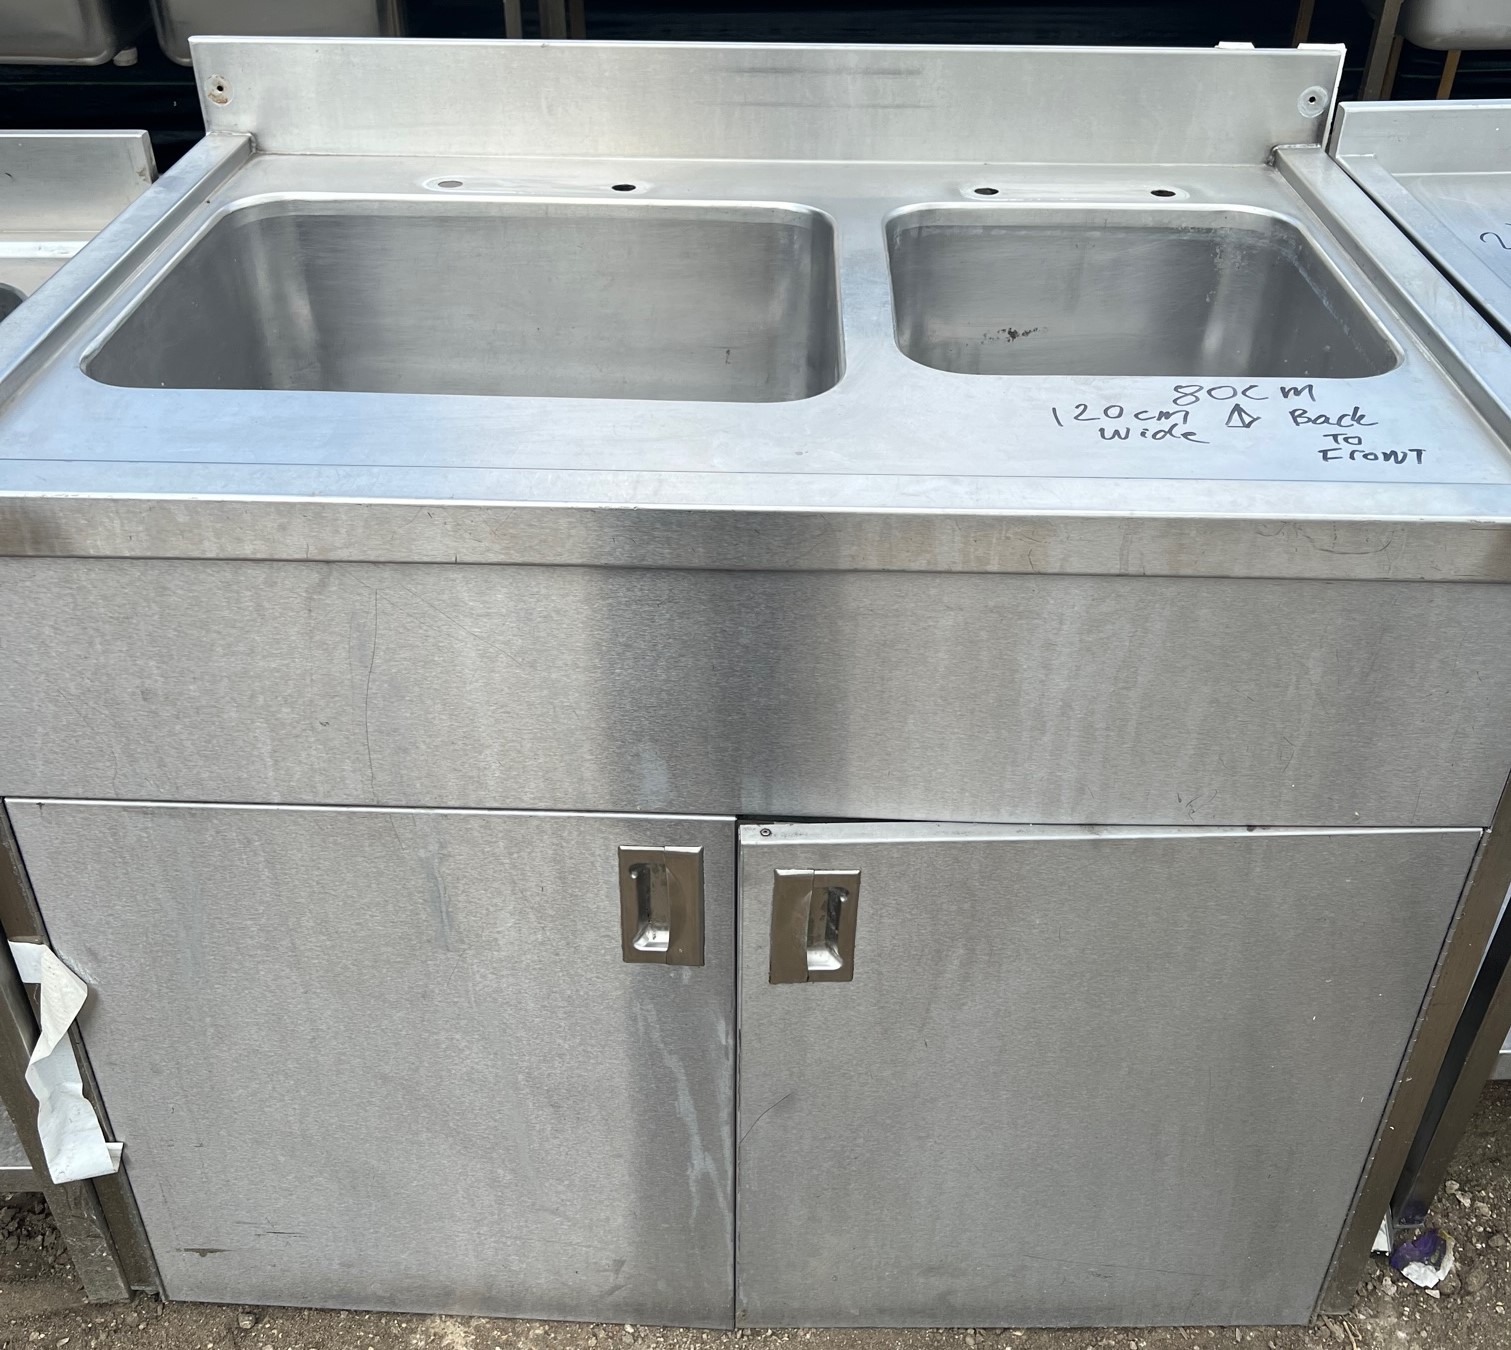 2 Bowl Stainless Steel Food Rinse Sink with Cupbpoard